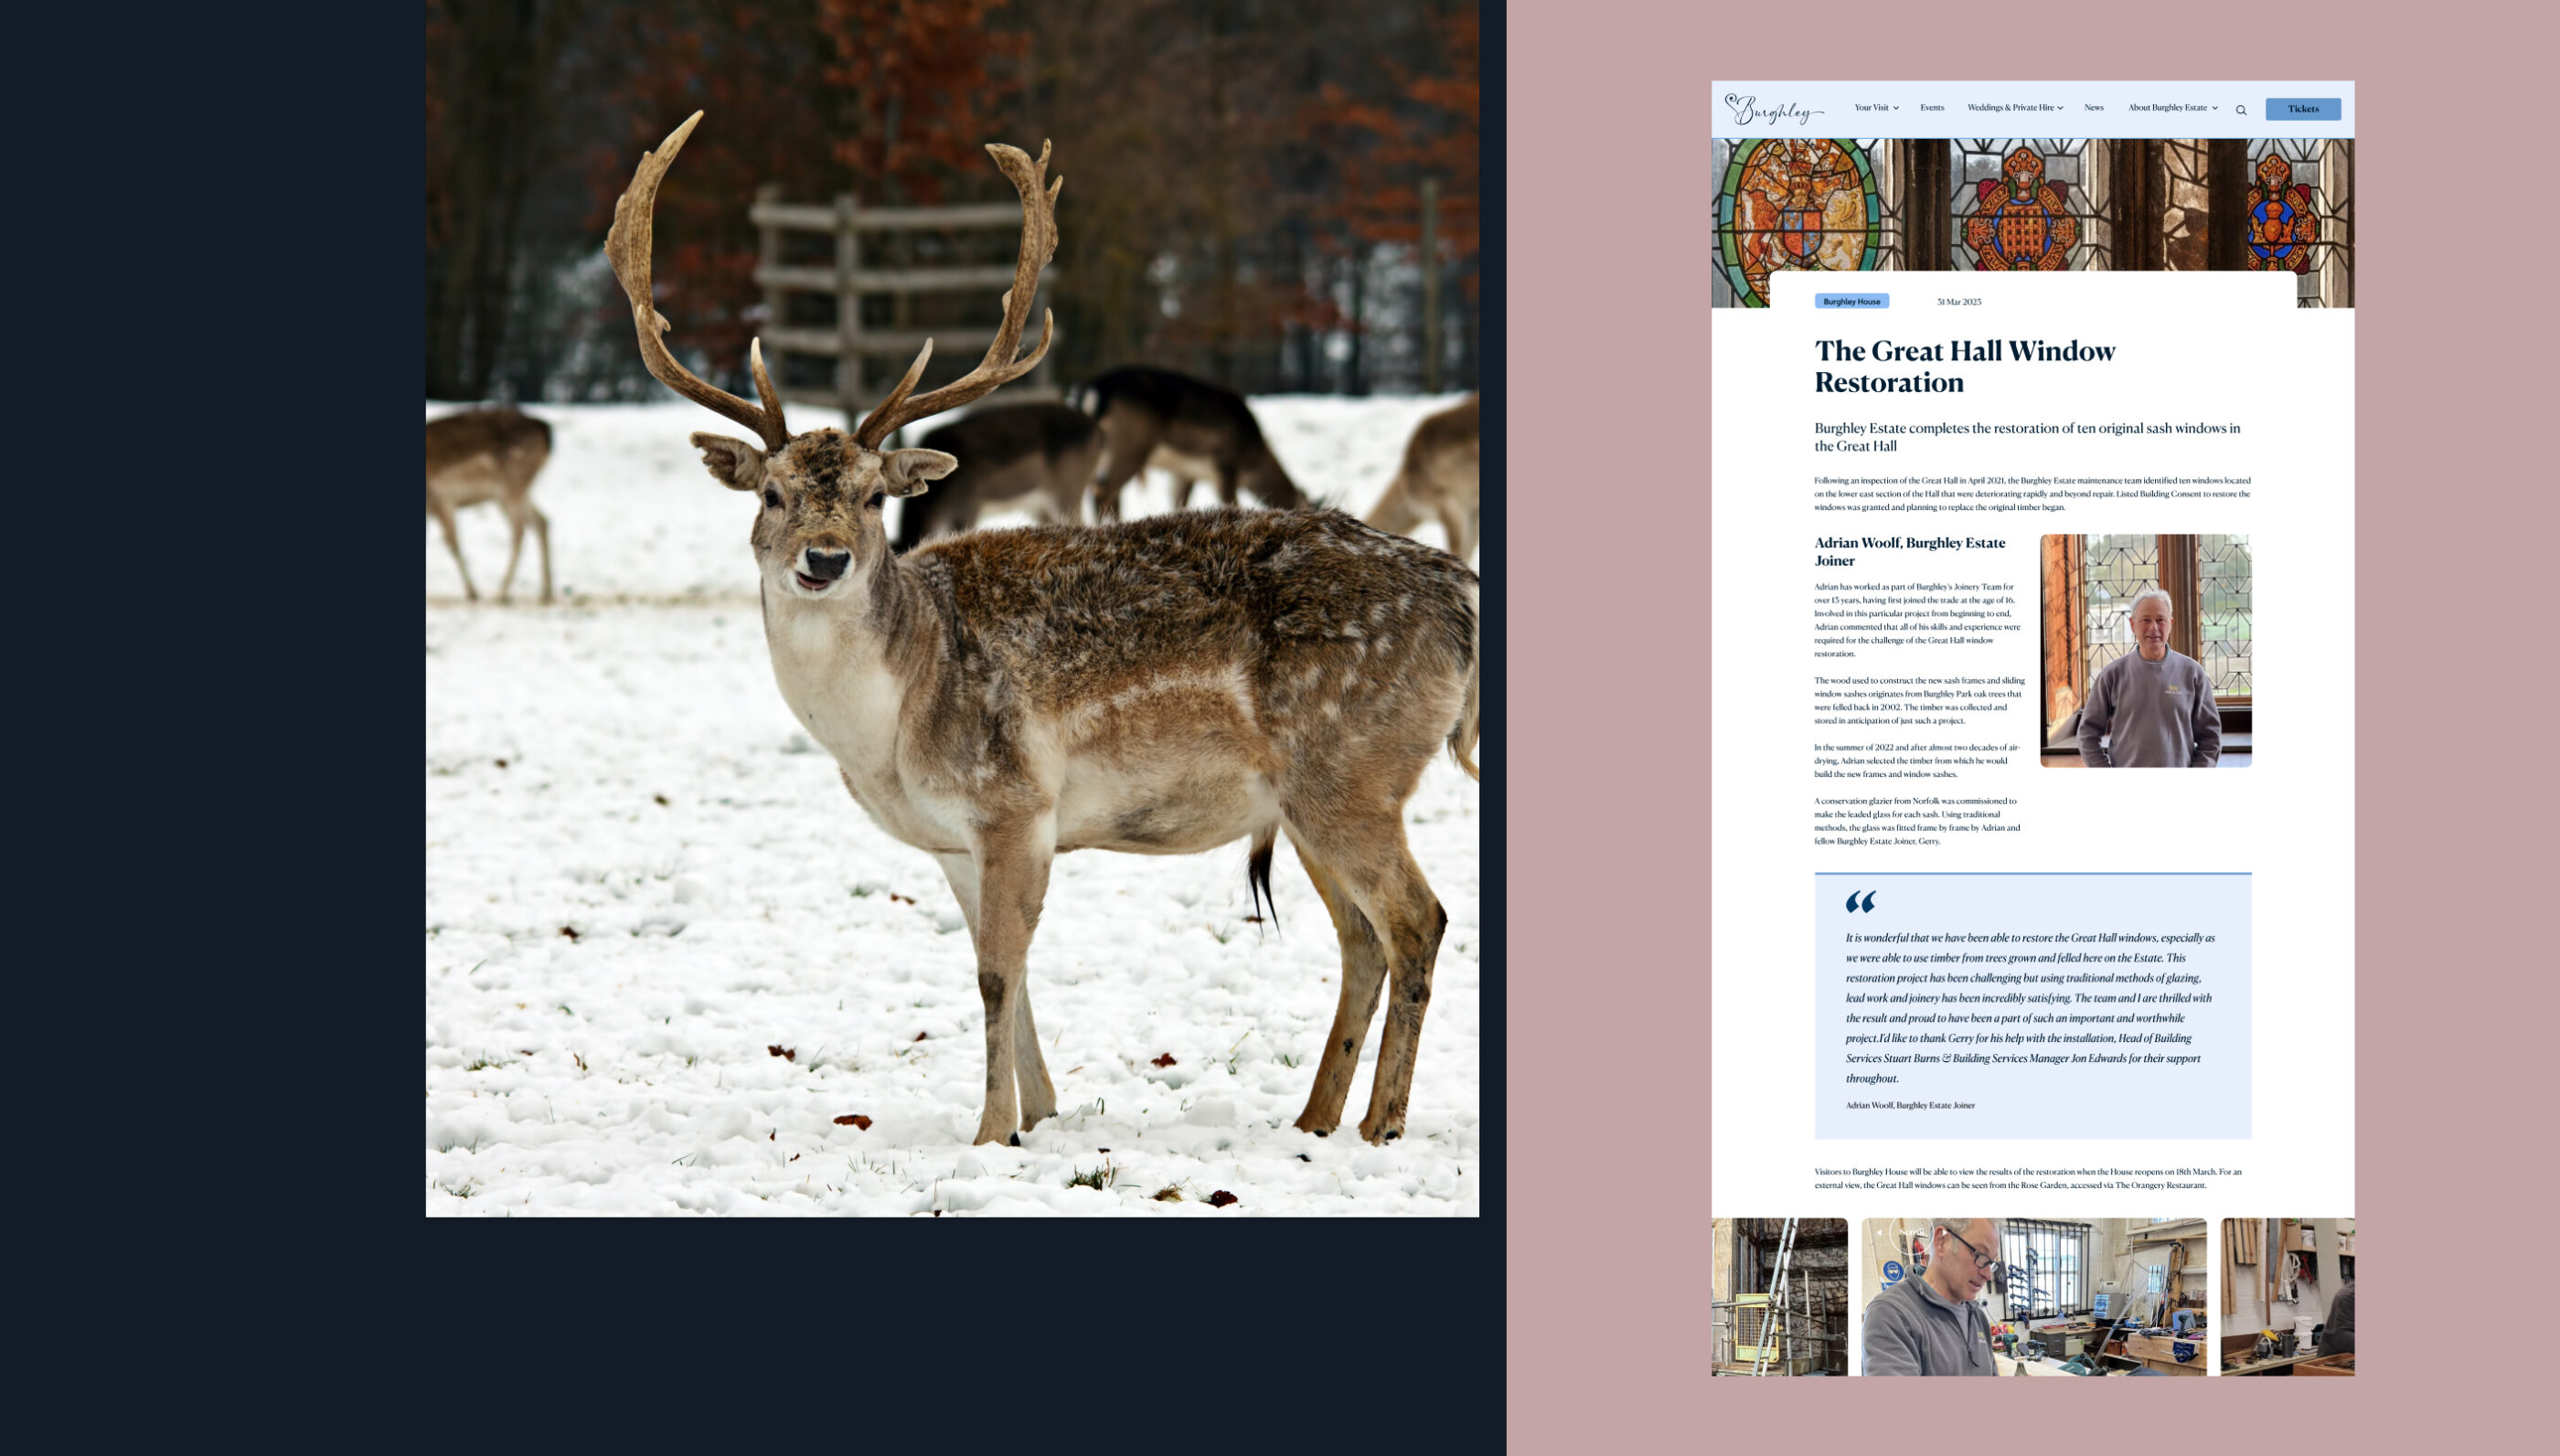 Burghley House news article alongside deer in snow